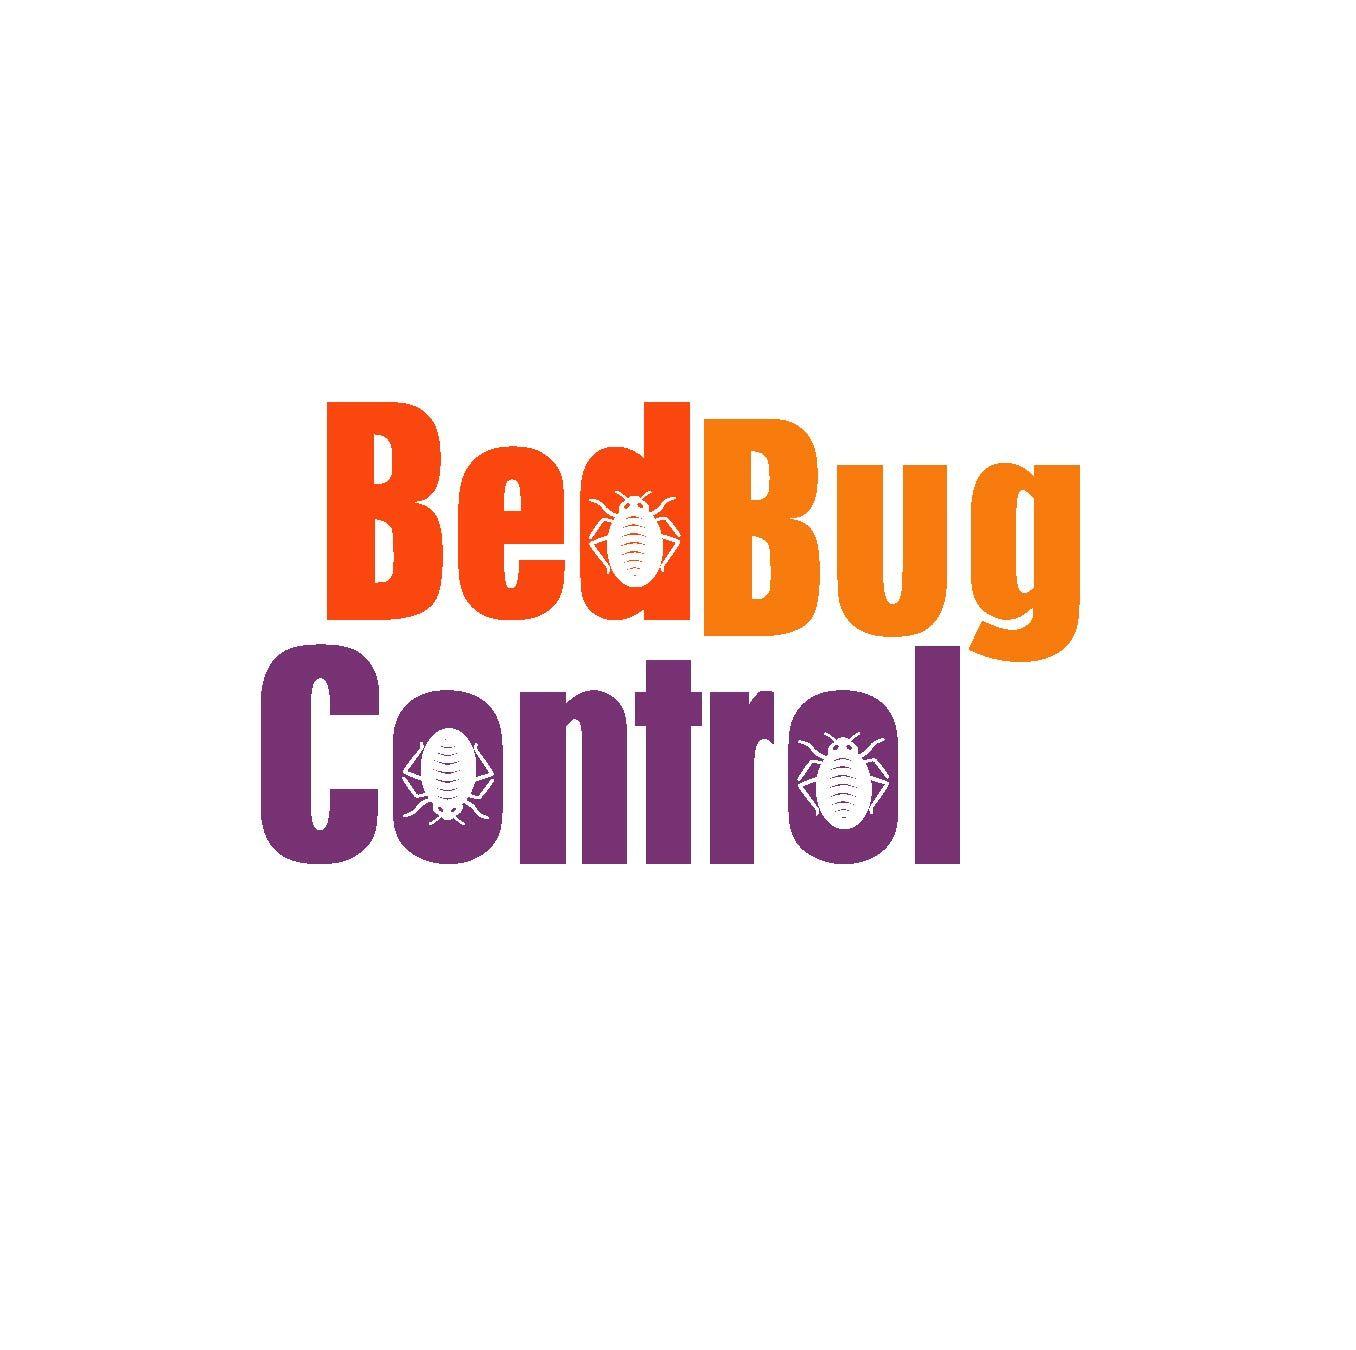 GCB Logo - Playful, Modern, It Company Logo Design for Bed Bug Control by gcb ...